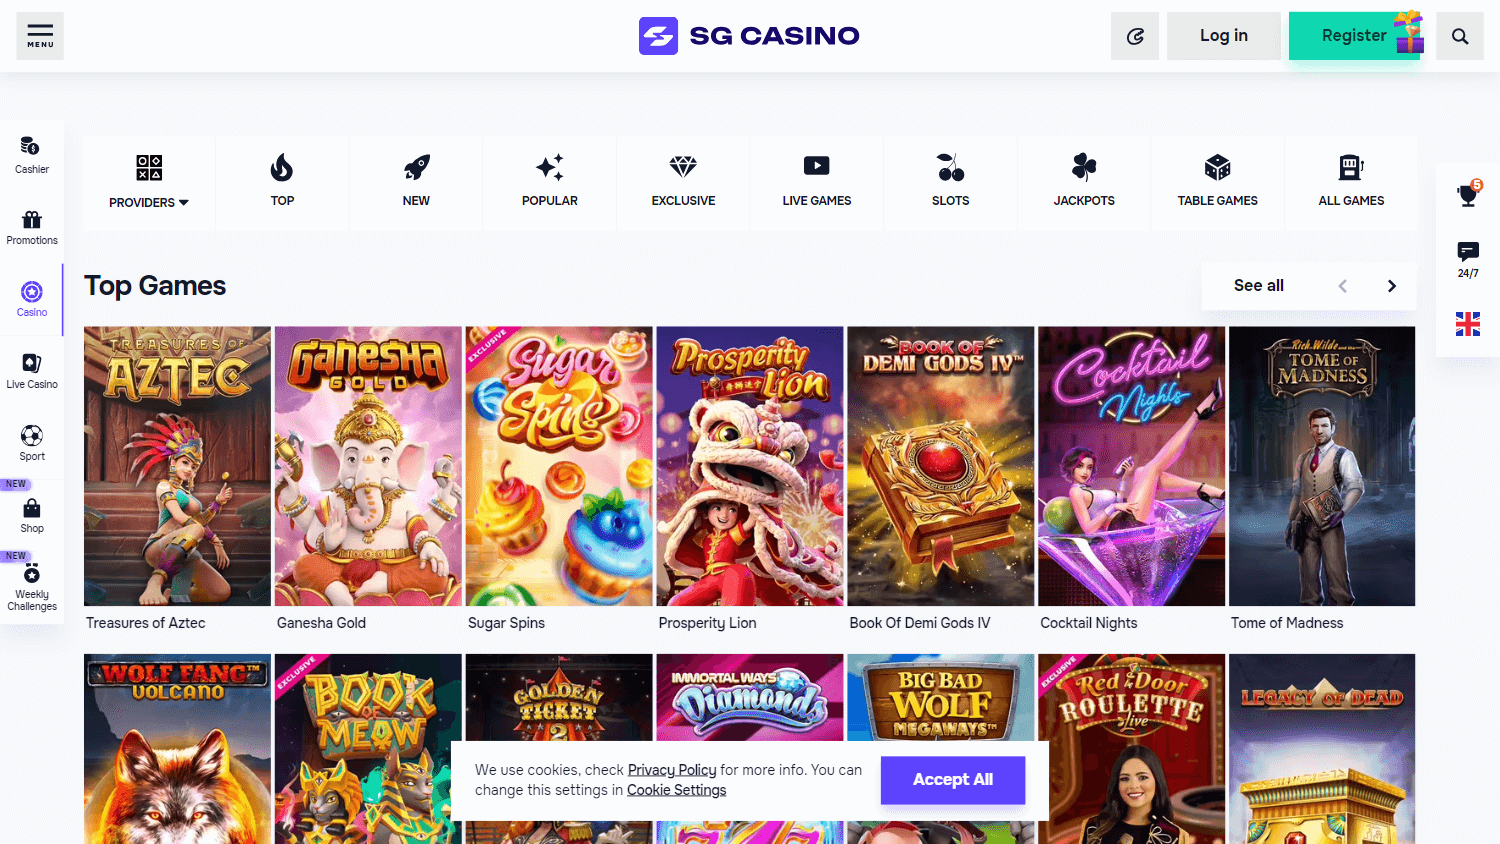 sg_casino_homepage_desktop